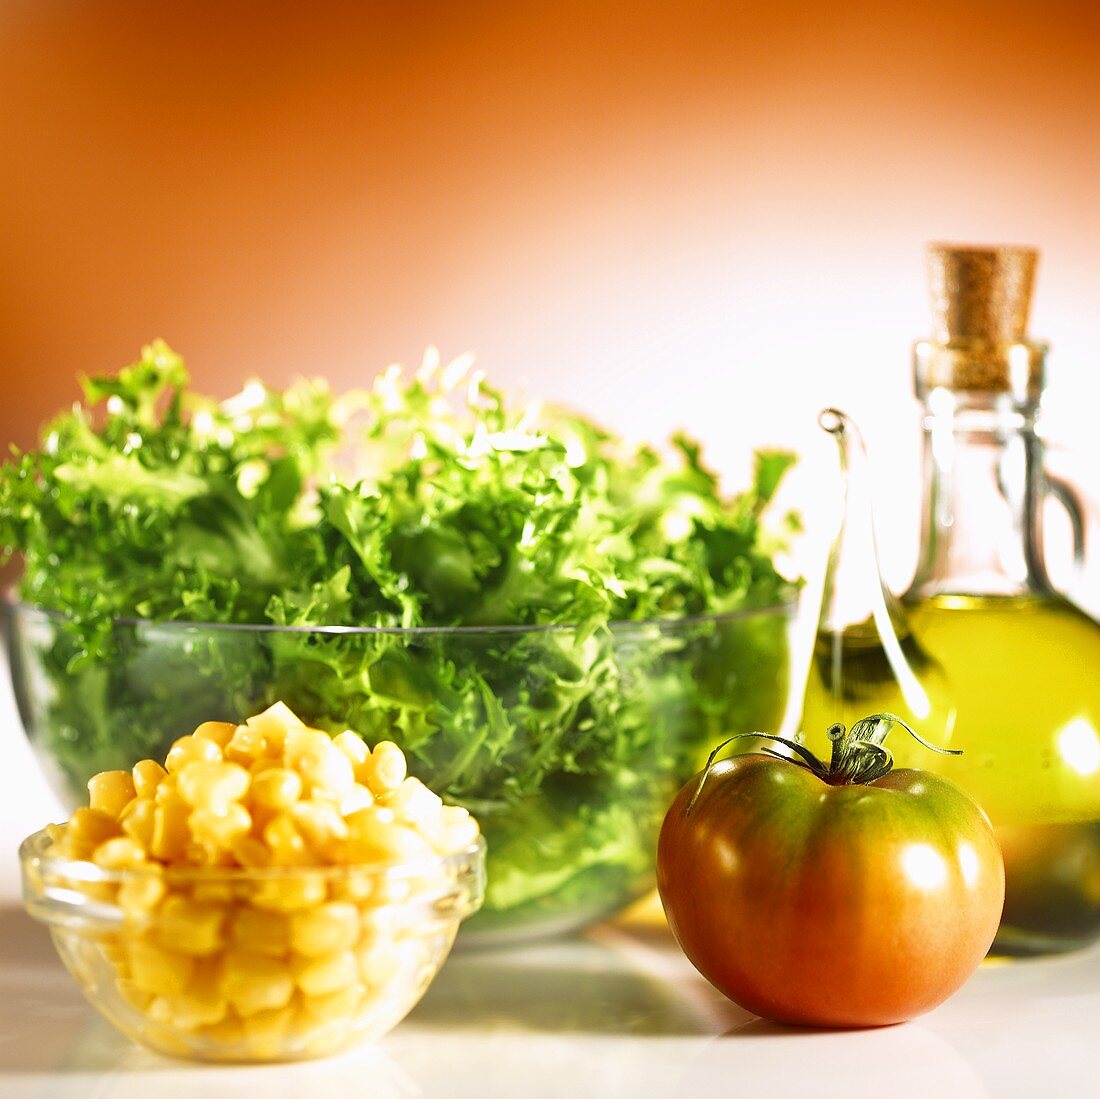 Blattsalat, Mais, Tomate und Olivenöl